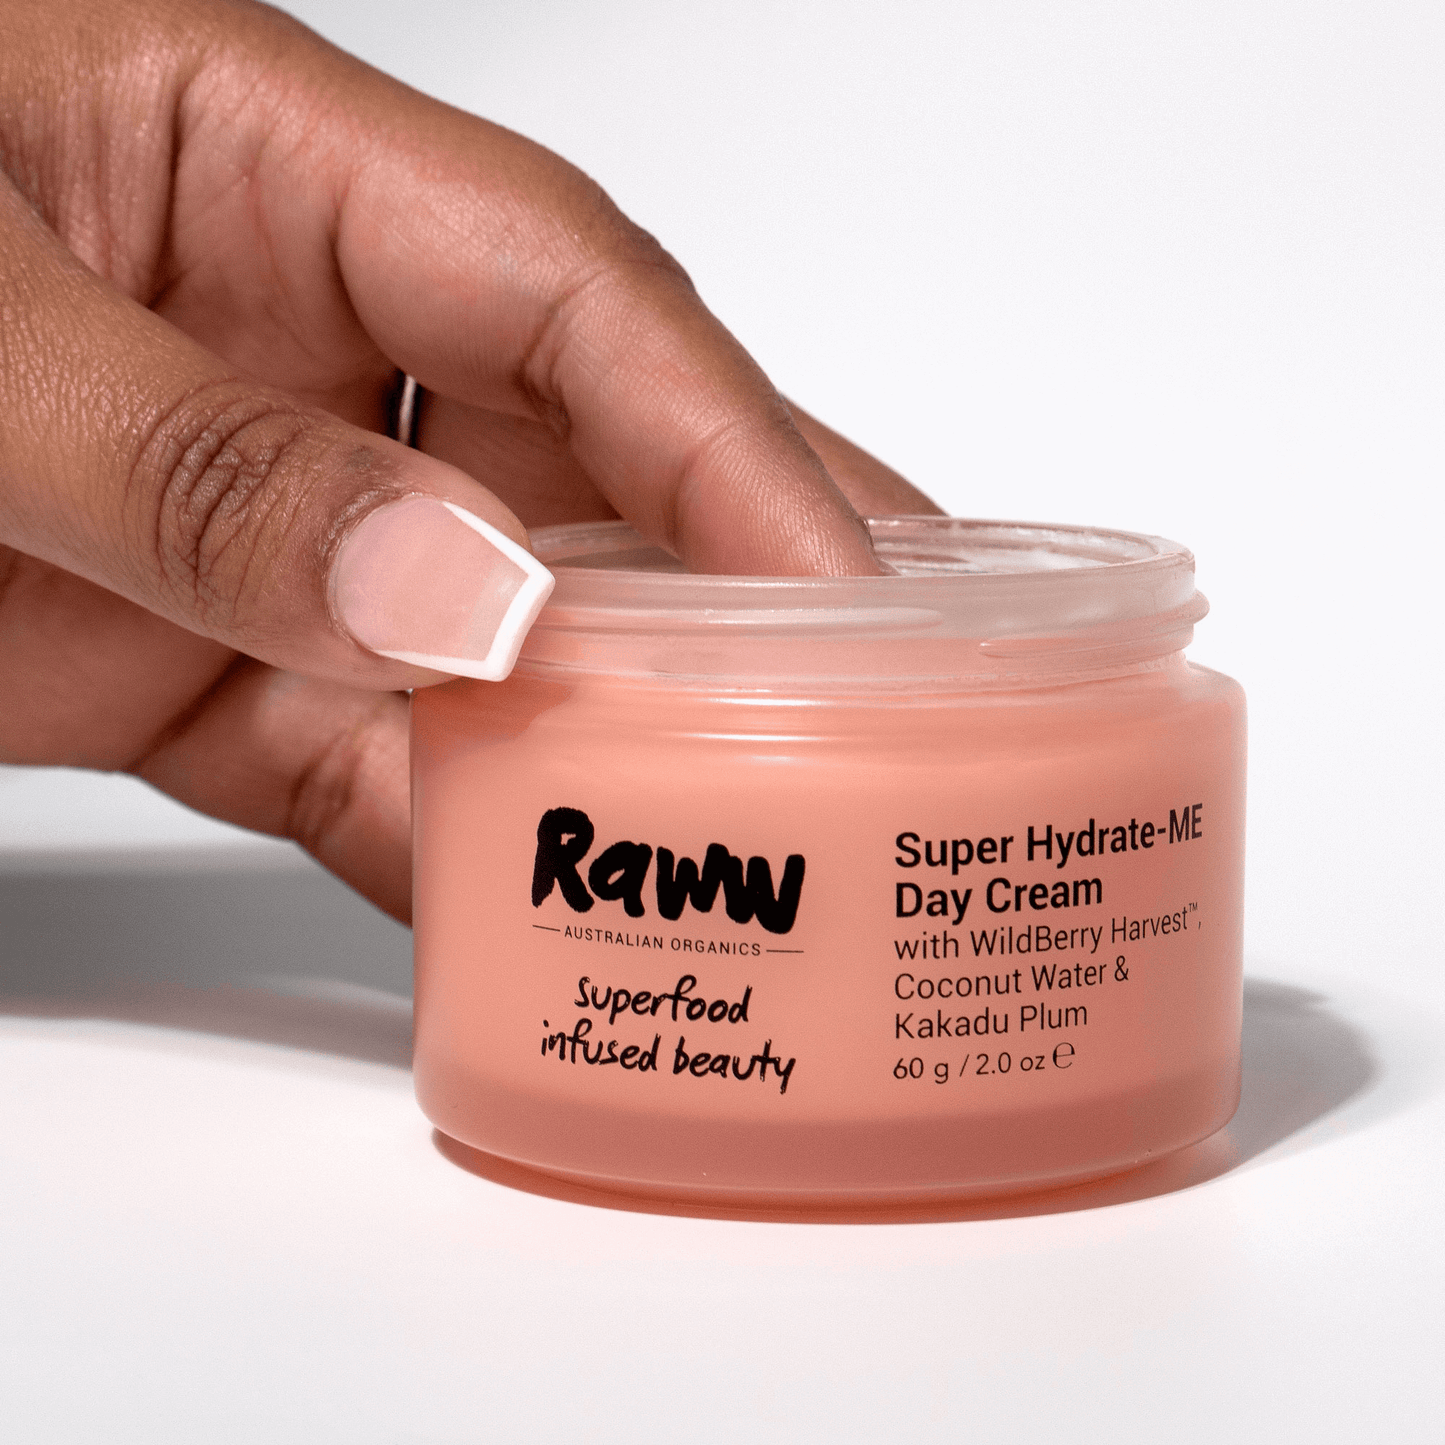 Super Hydrate-ME Day Cream | RAWW Cosmetics | Lifestyle 02